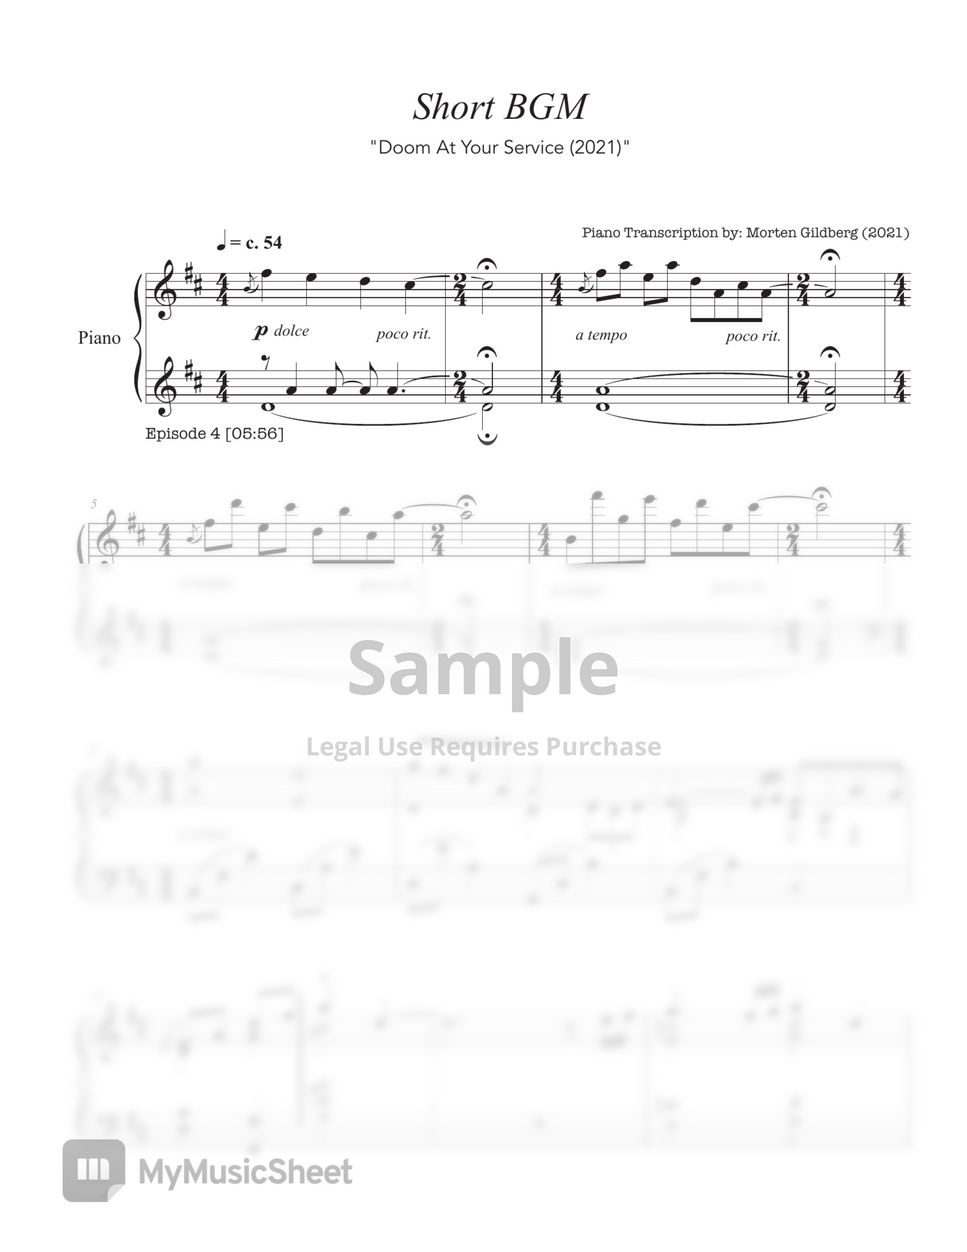 Doom At Your Service (2021) - (어느 날 우리 집 현관으로 멸망이 들어왔다) - 'Short BGM' - piano arrangement by Morten Gildberg